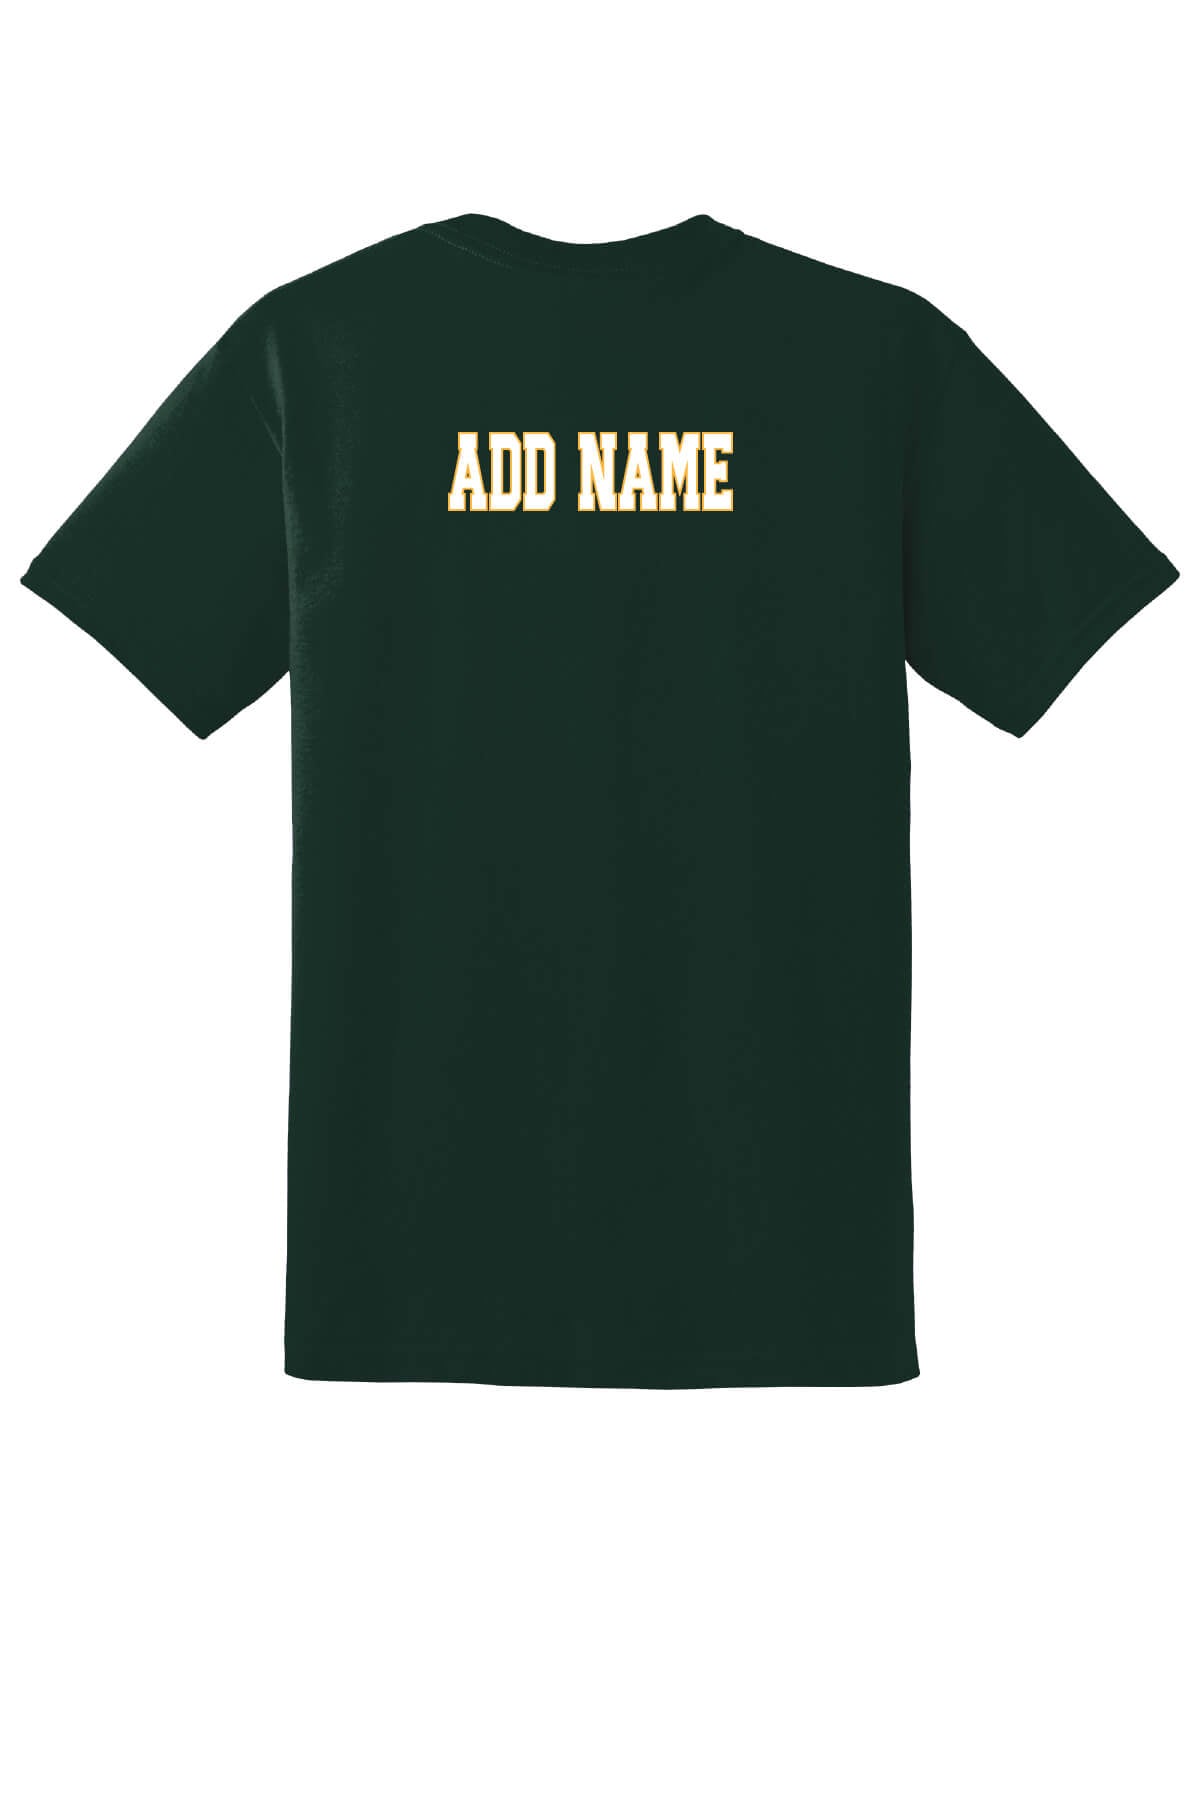 Notre Dame Spartans Short Sleeve T-Shirt back-green